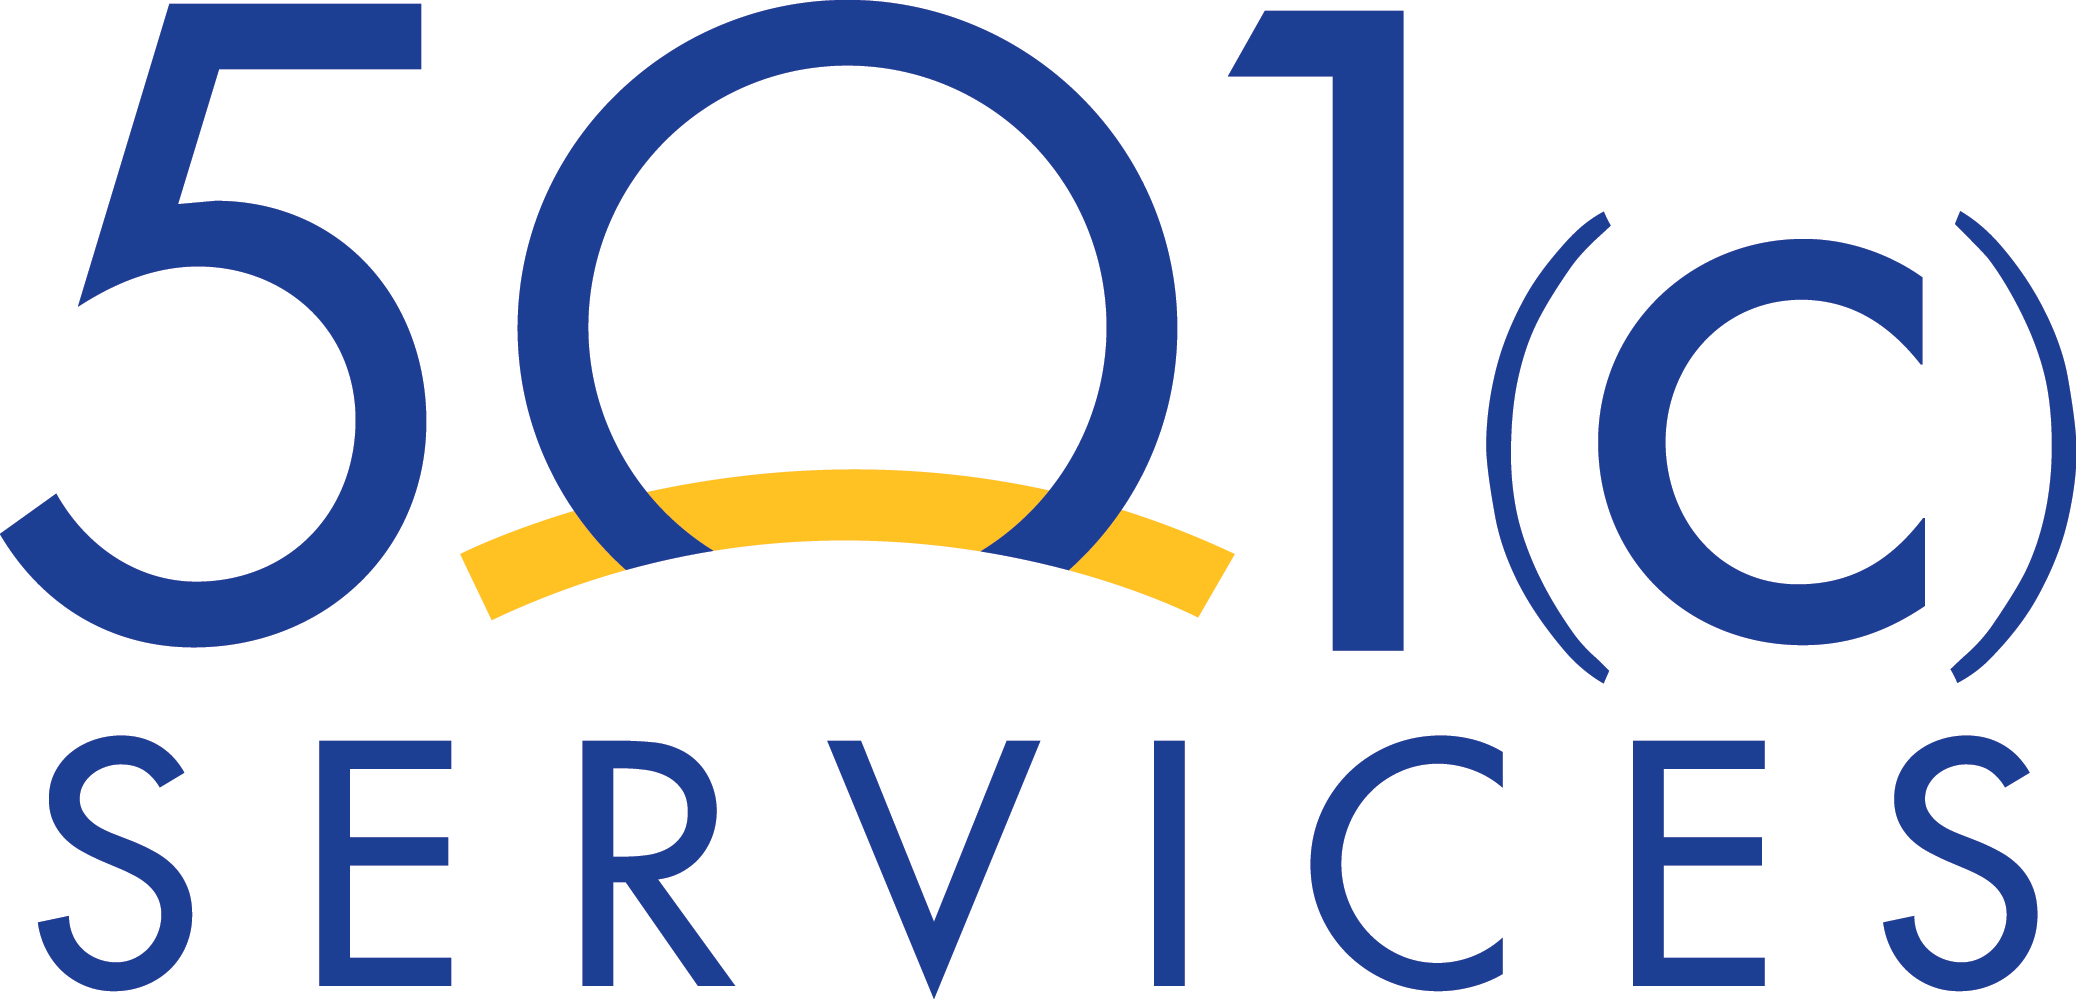 501c Services logo